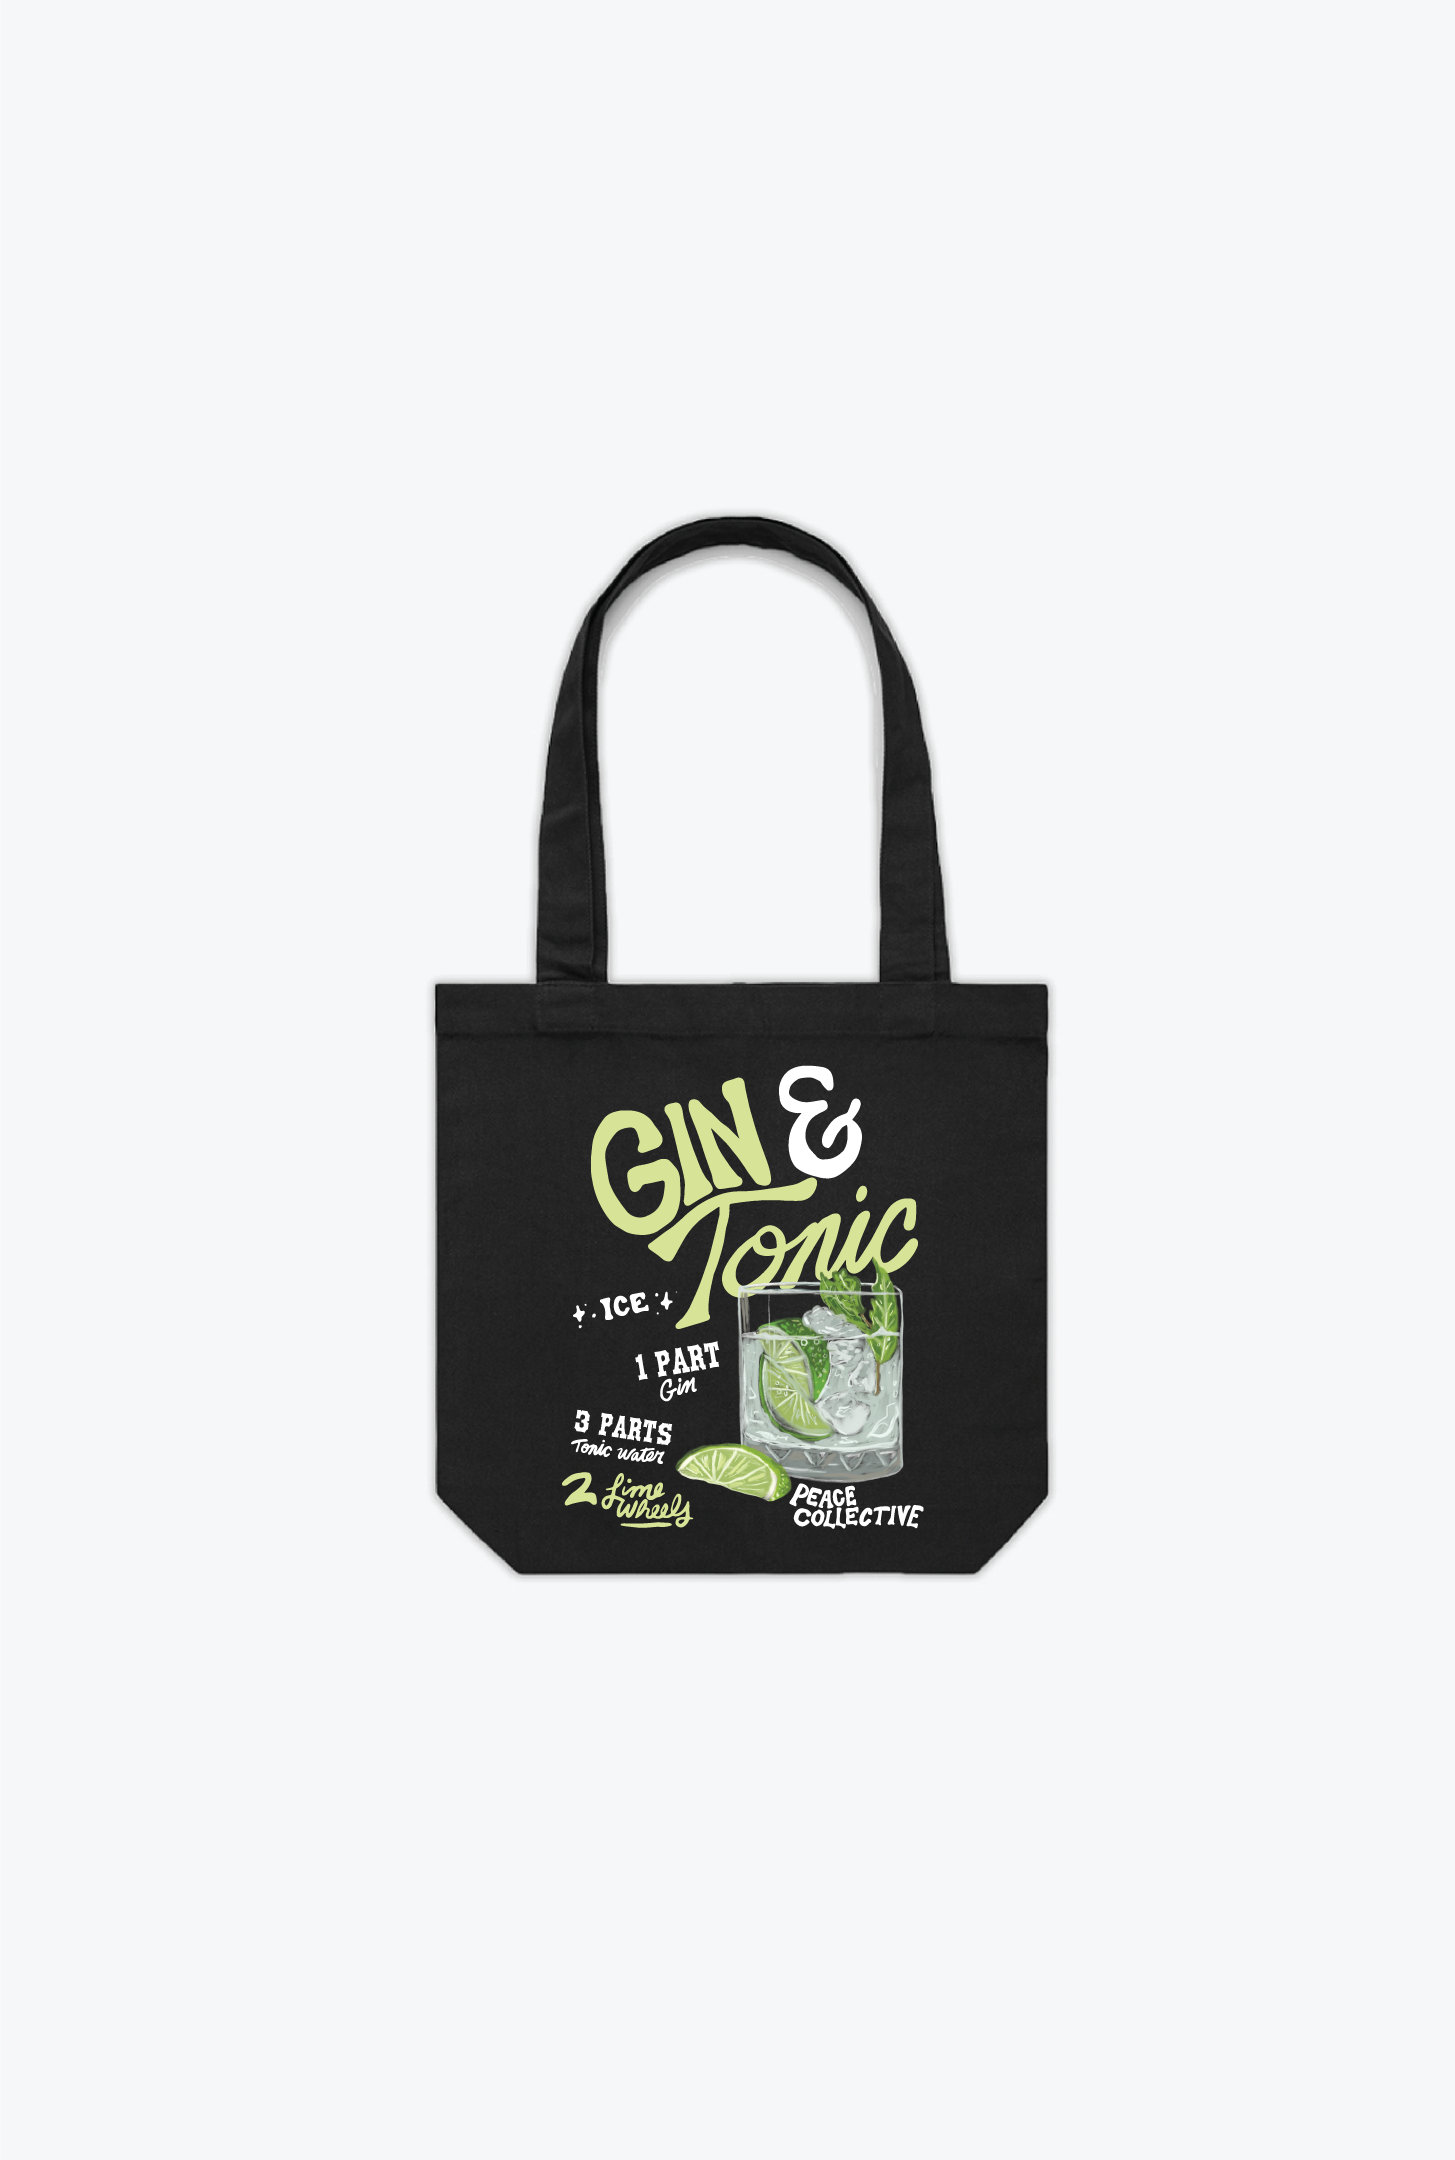 Gin & Tonic Tote Bag - Black